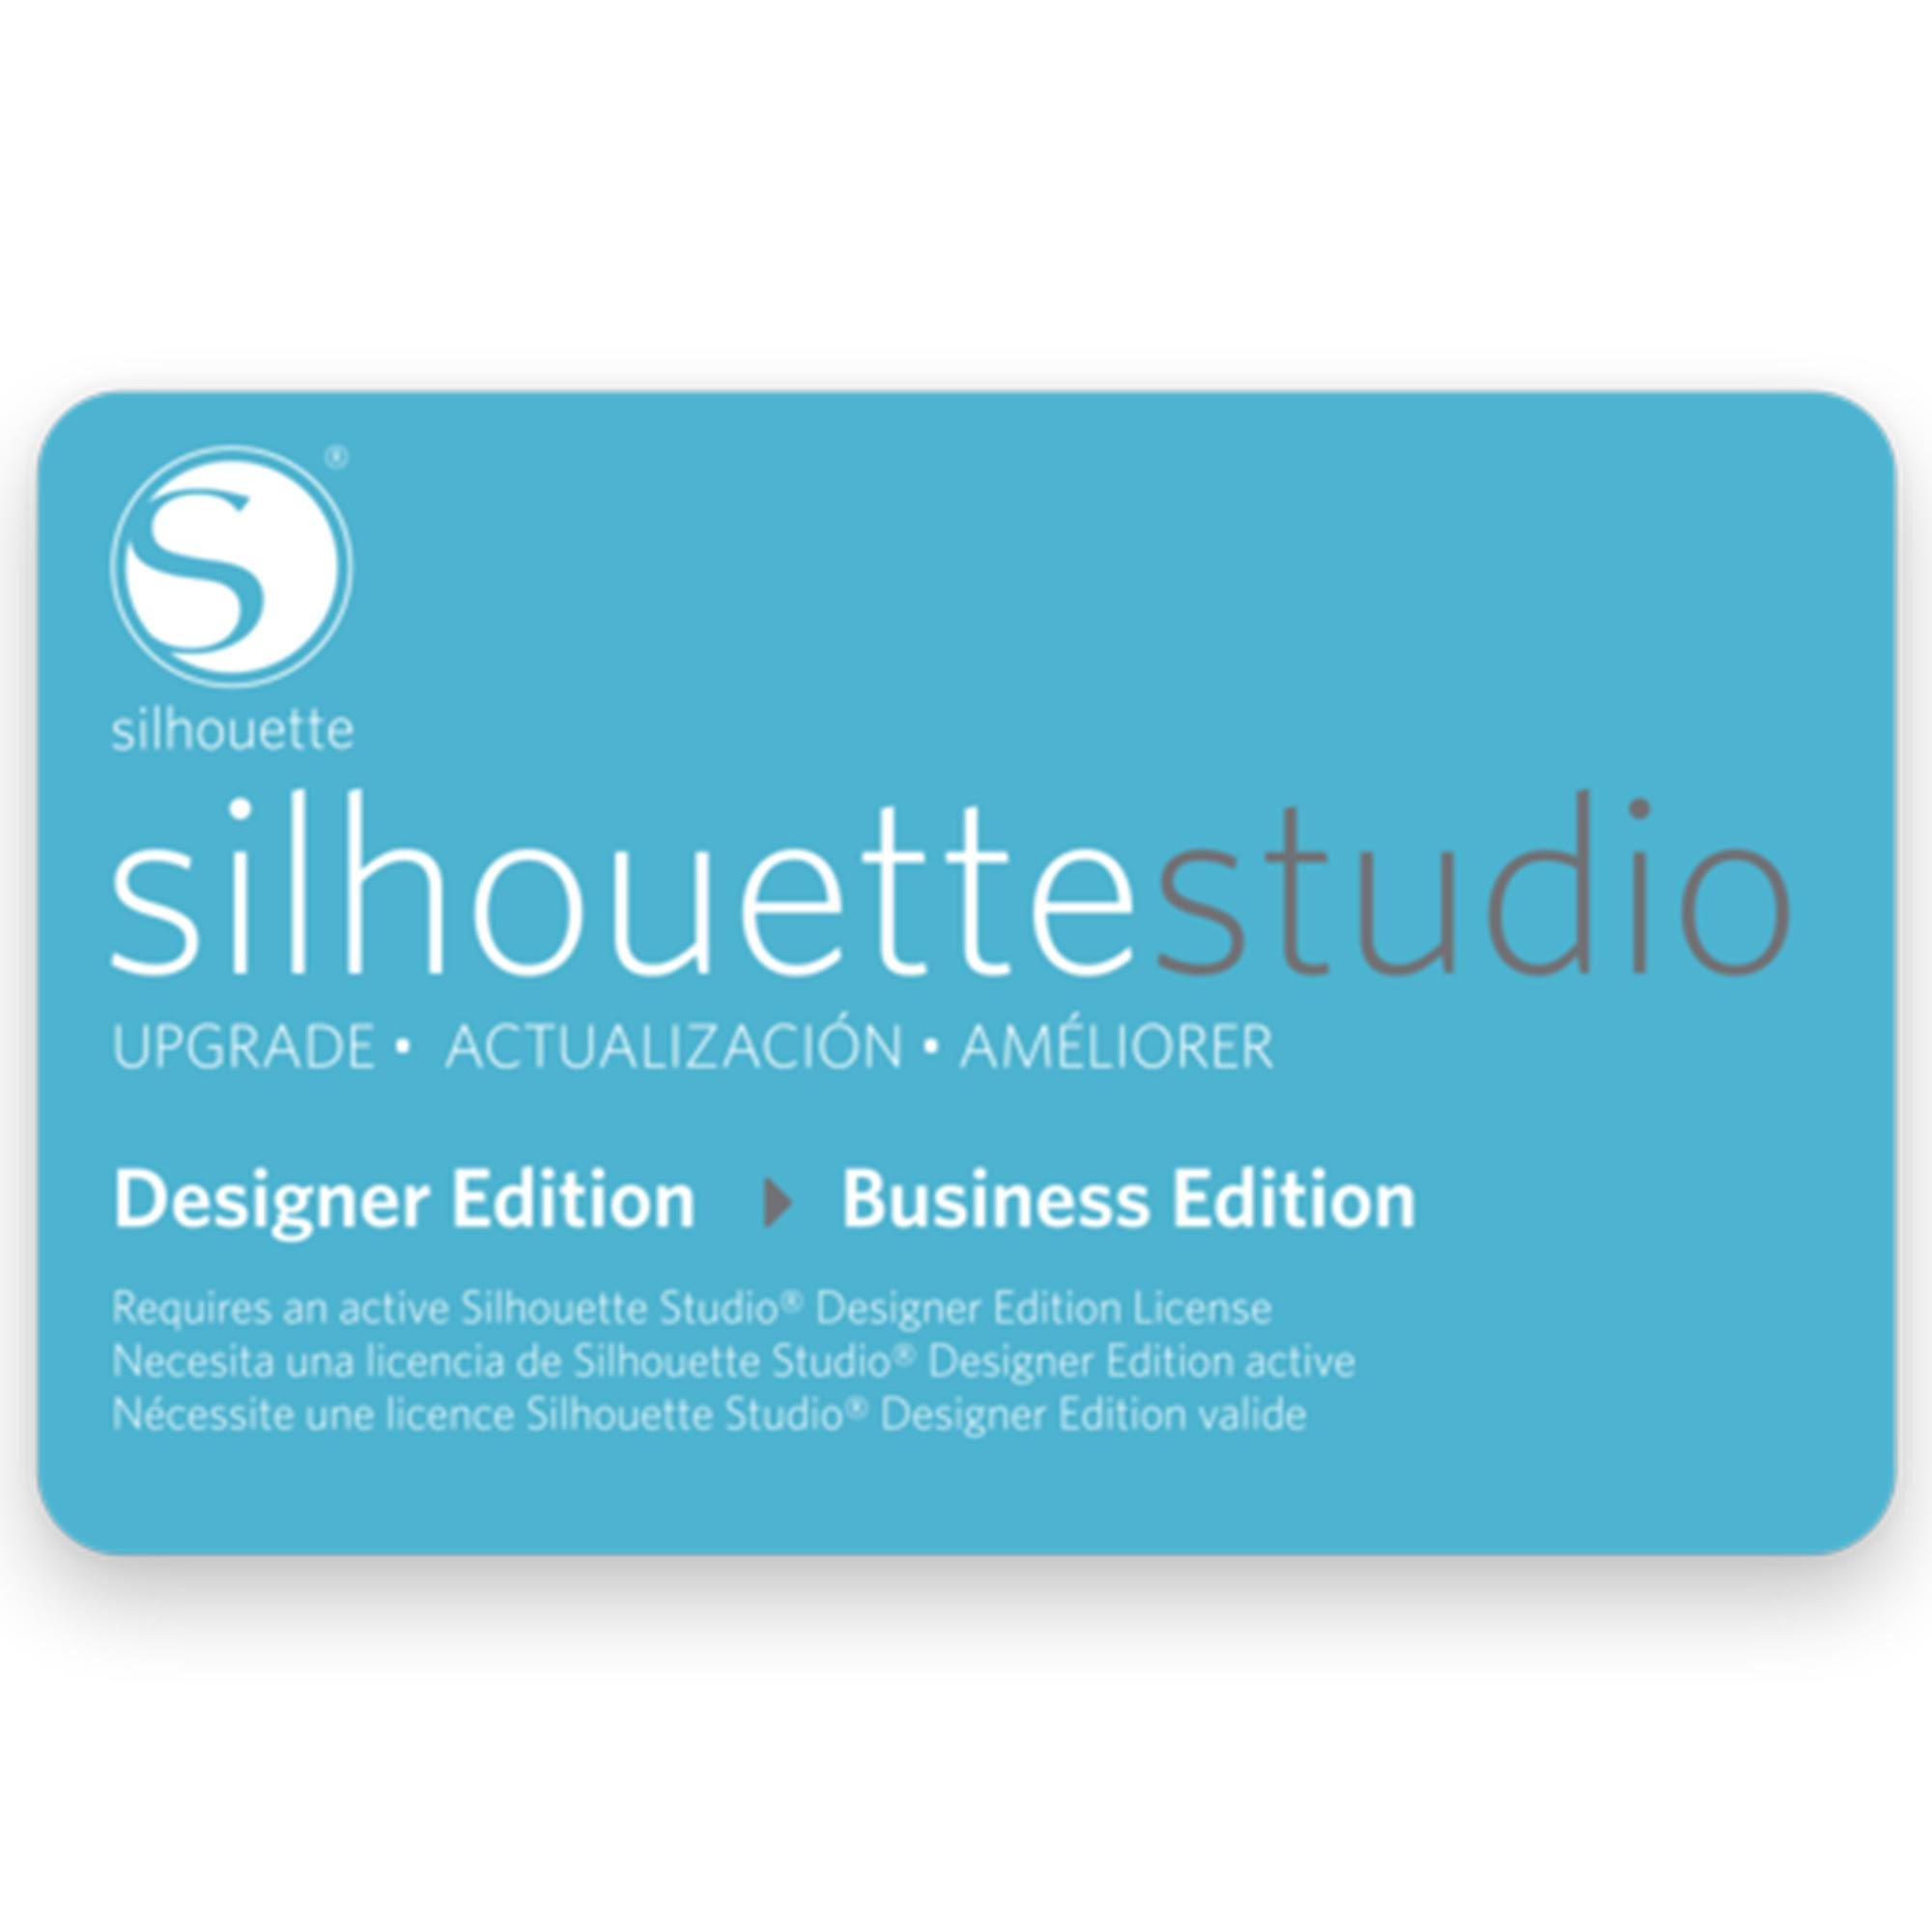 Rozszerzenie Silhouette Studio Designer Edition do Business Edition